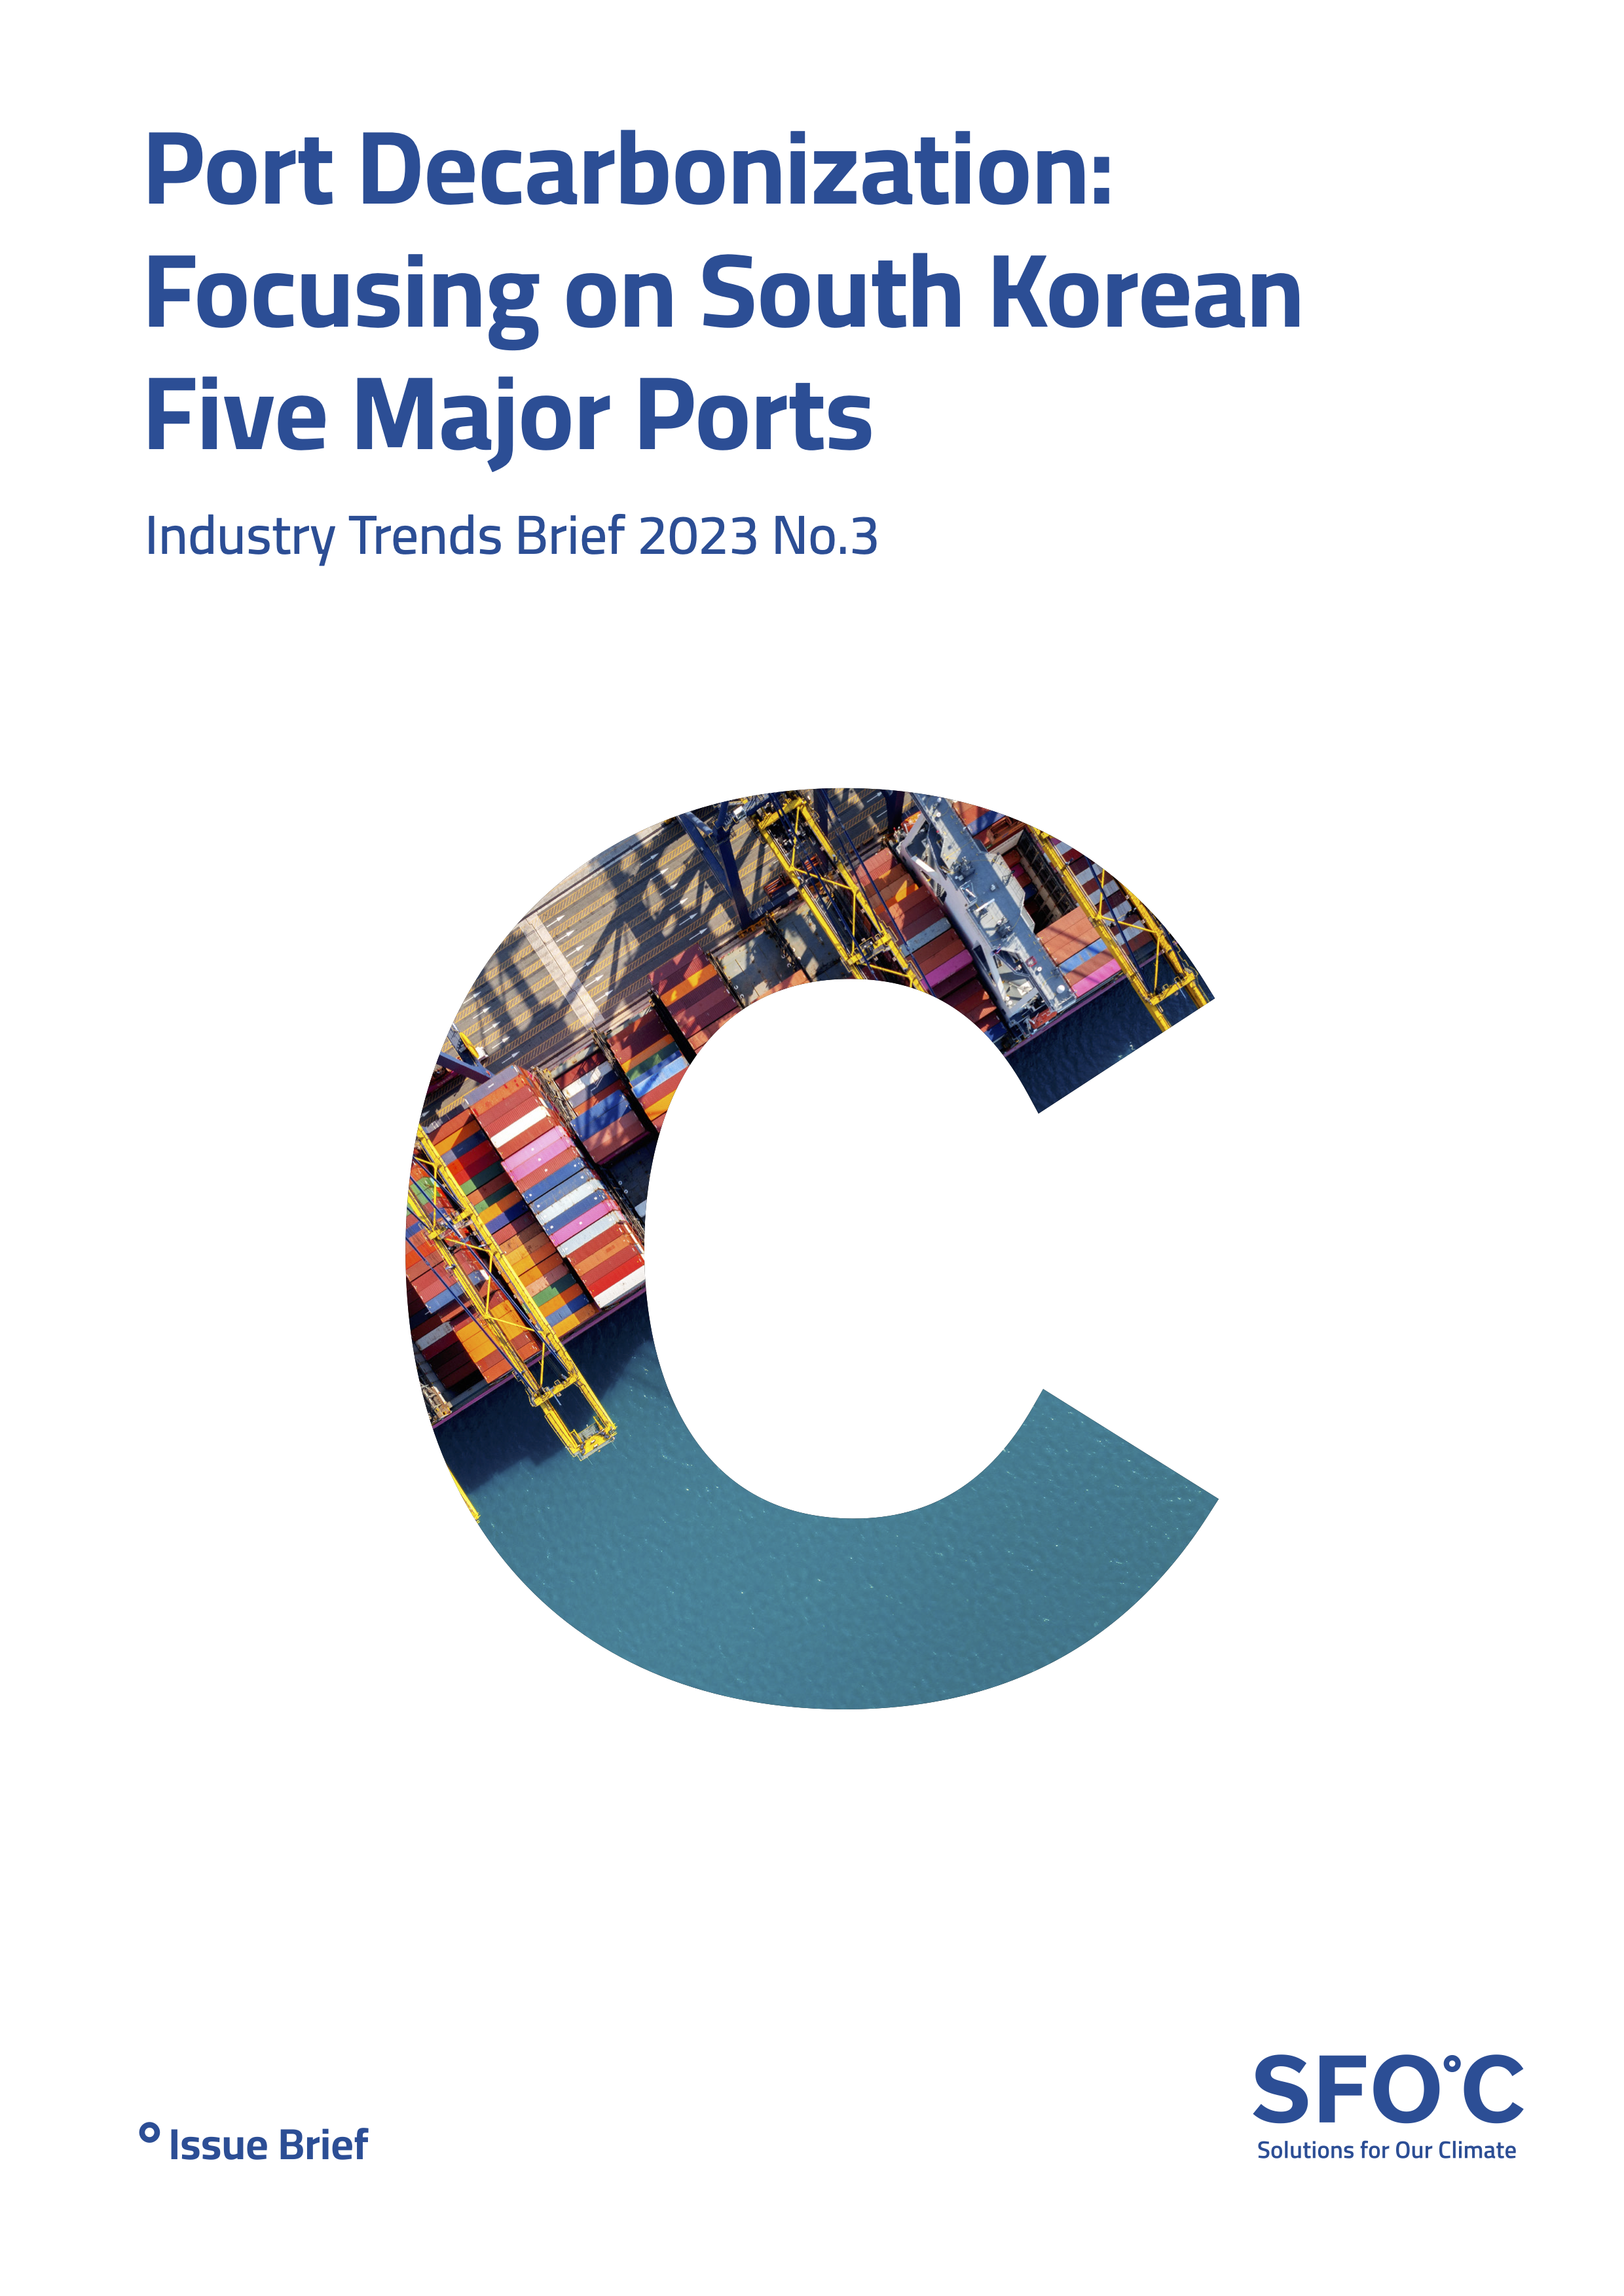 Industry Trends Brief No.3 - Port Decarbonization: Focusing on South Korean Five Major Ports